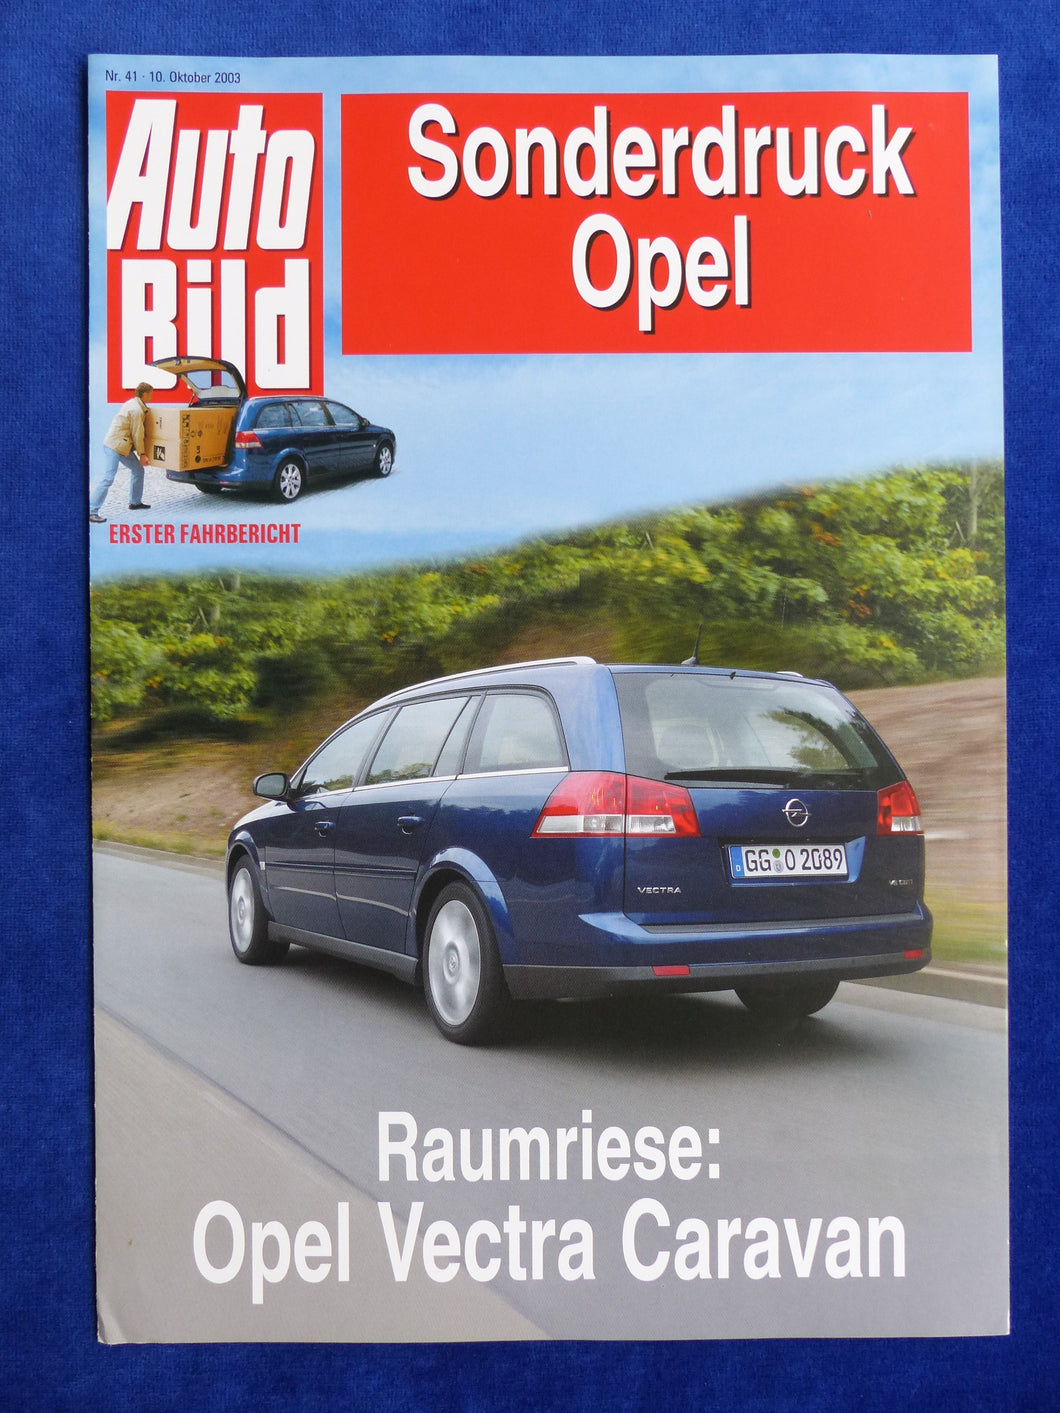 Opel Vectra Caravan - Fahrbericht - Sonderdruck Auto Bild 41/2003 - car-brochure